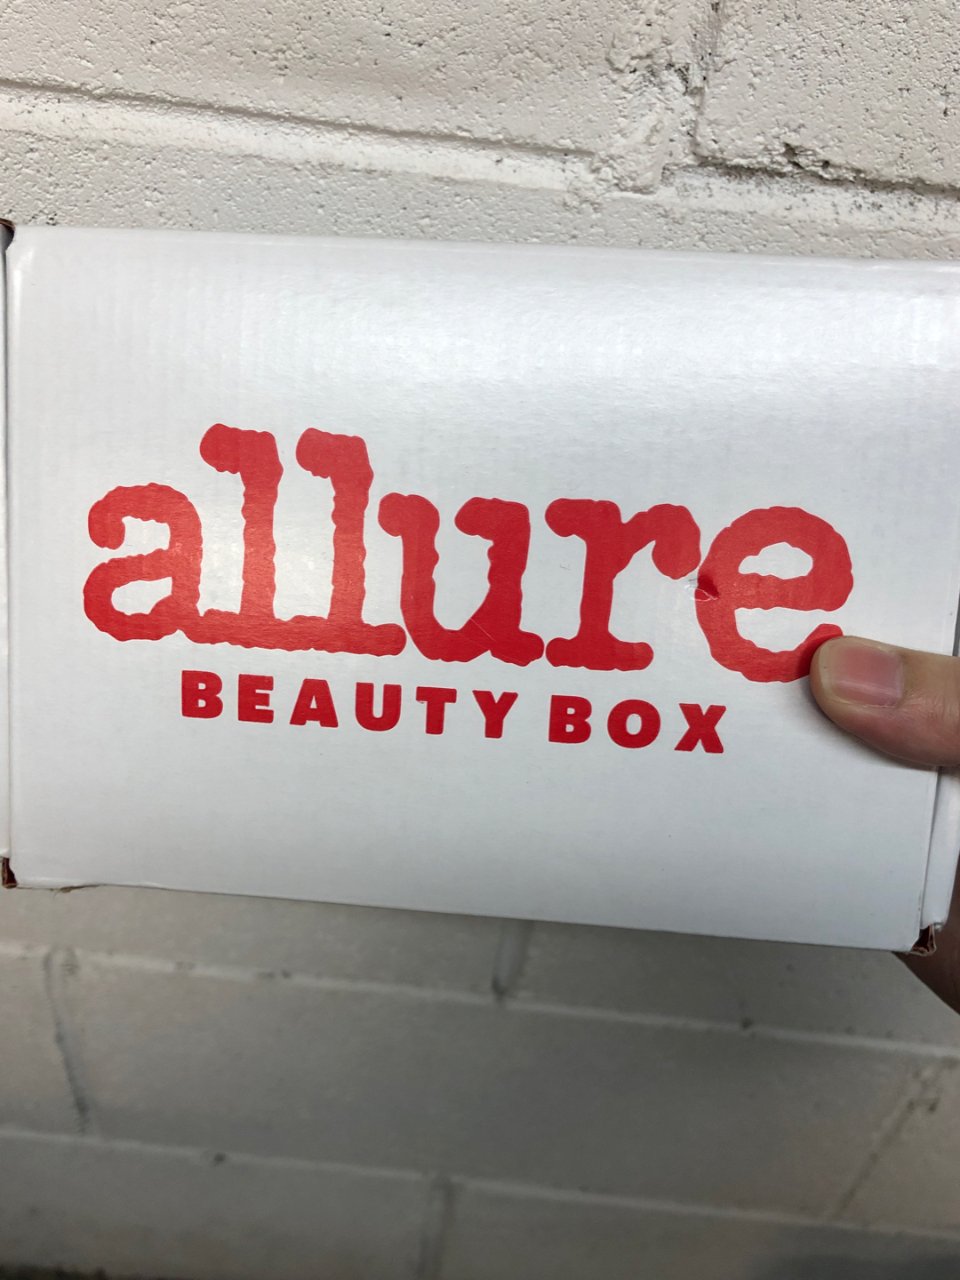 Allure beauty盒子